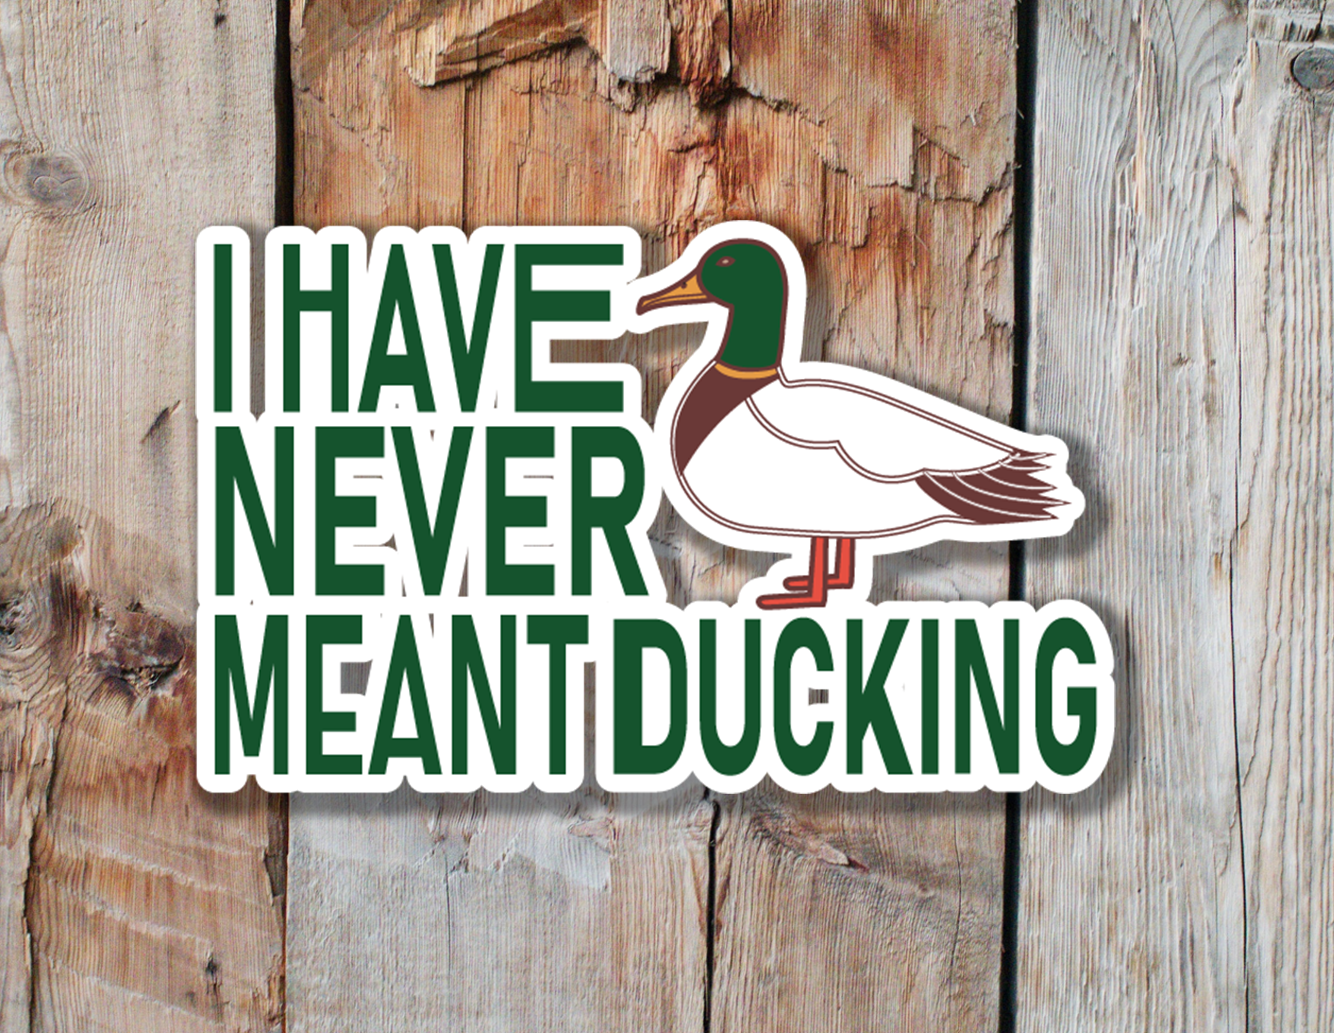 I've never meant ducking Sticker| Duck Sticker for Water Bottle |I meant Fuck  Sticker| Grammer Sticker for Water Bottles | Humorous Decal